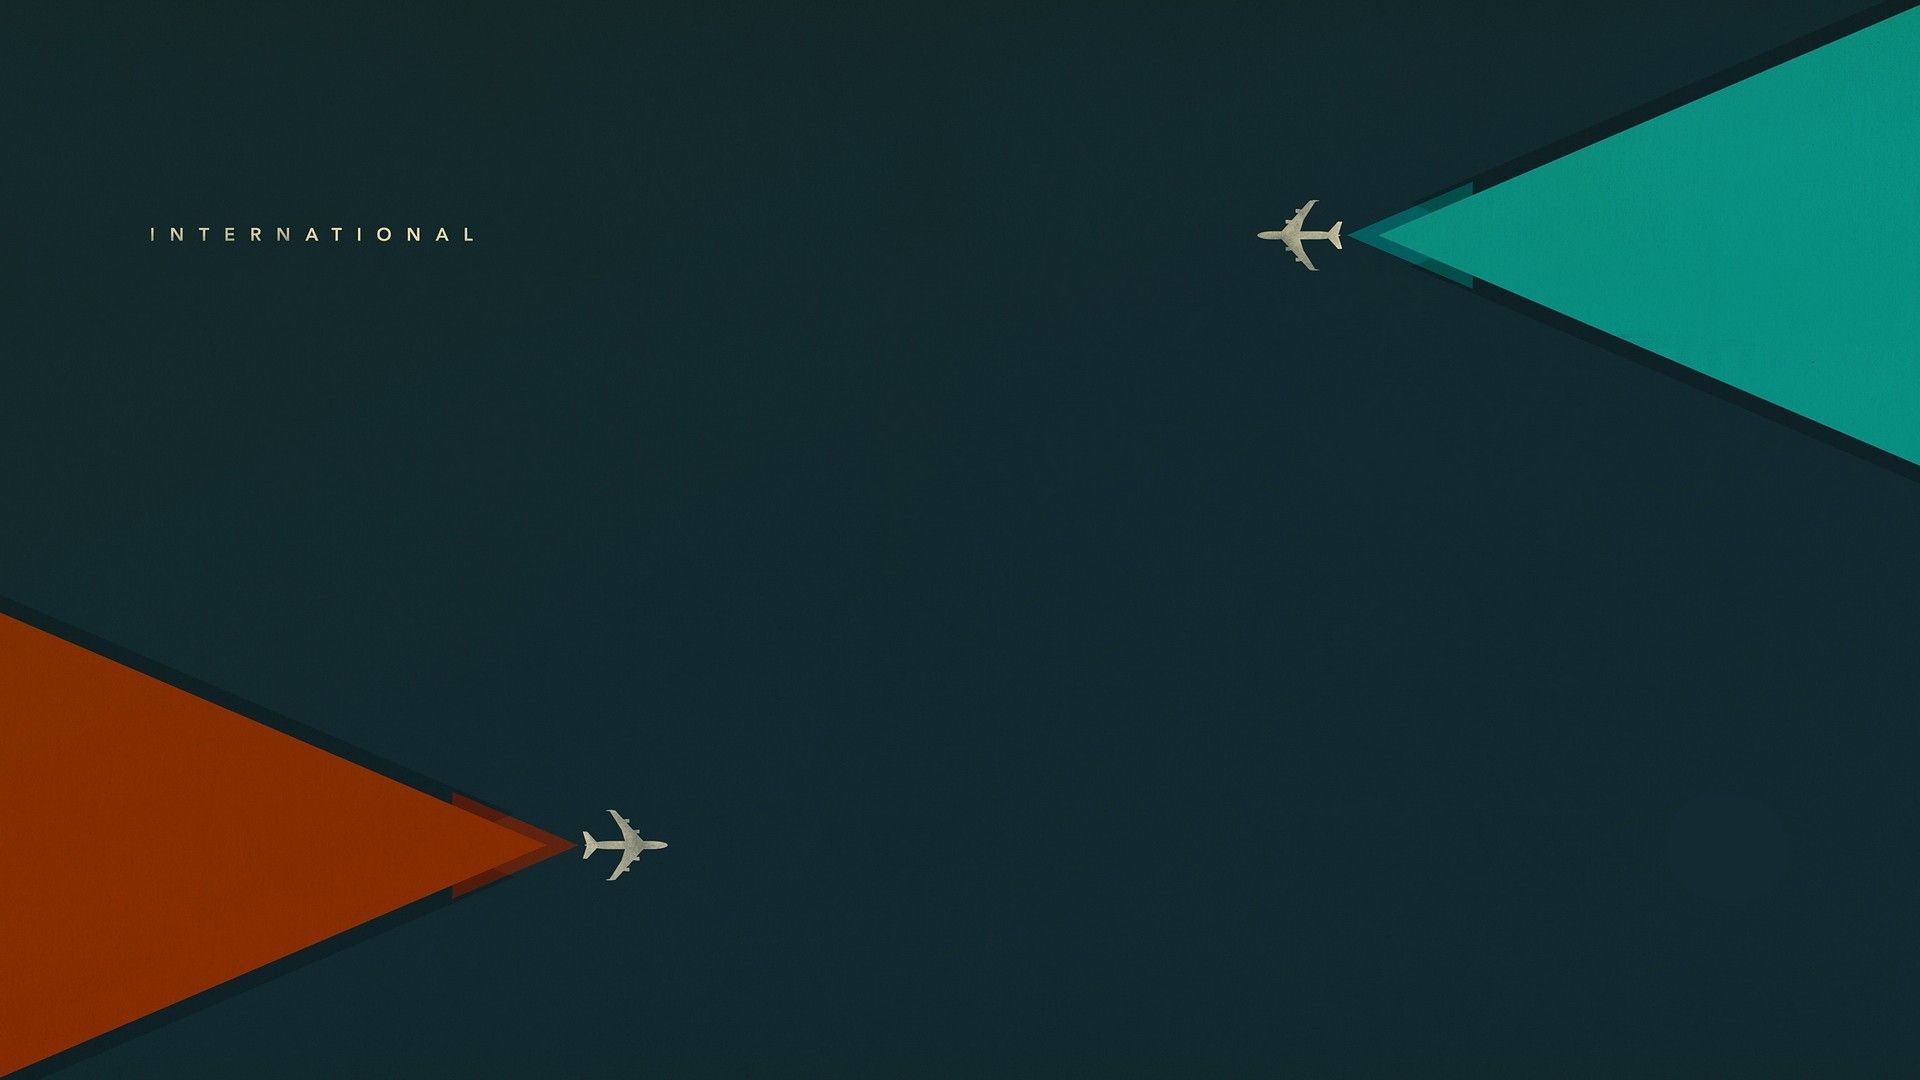 Airplane Minimalism, HD Planes, 4k Wallpaper, Image, Background